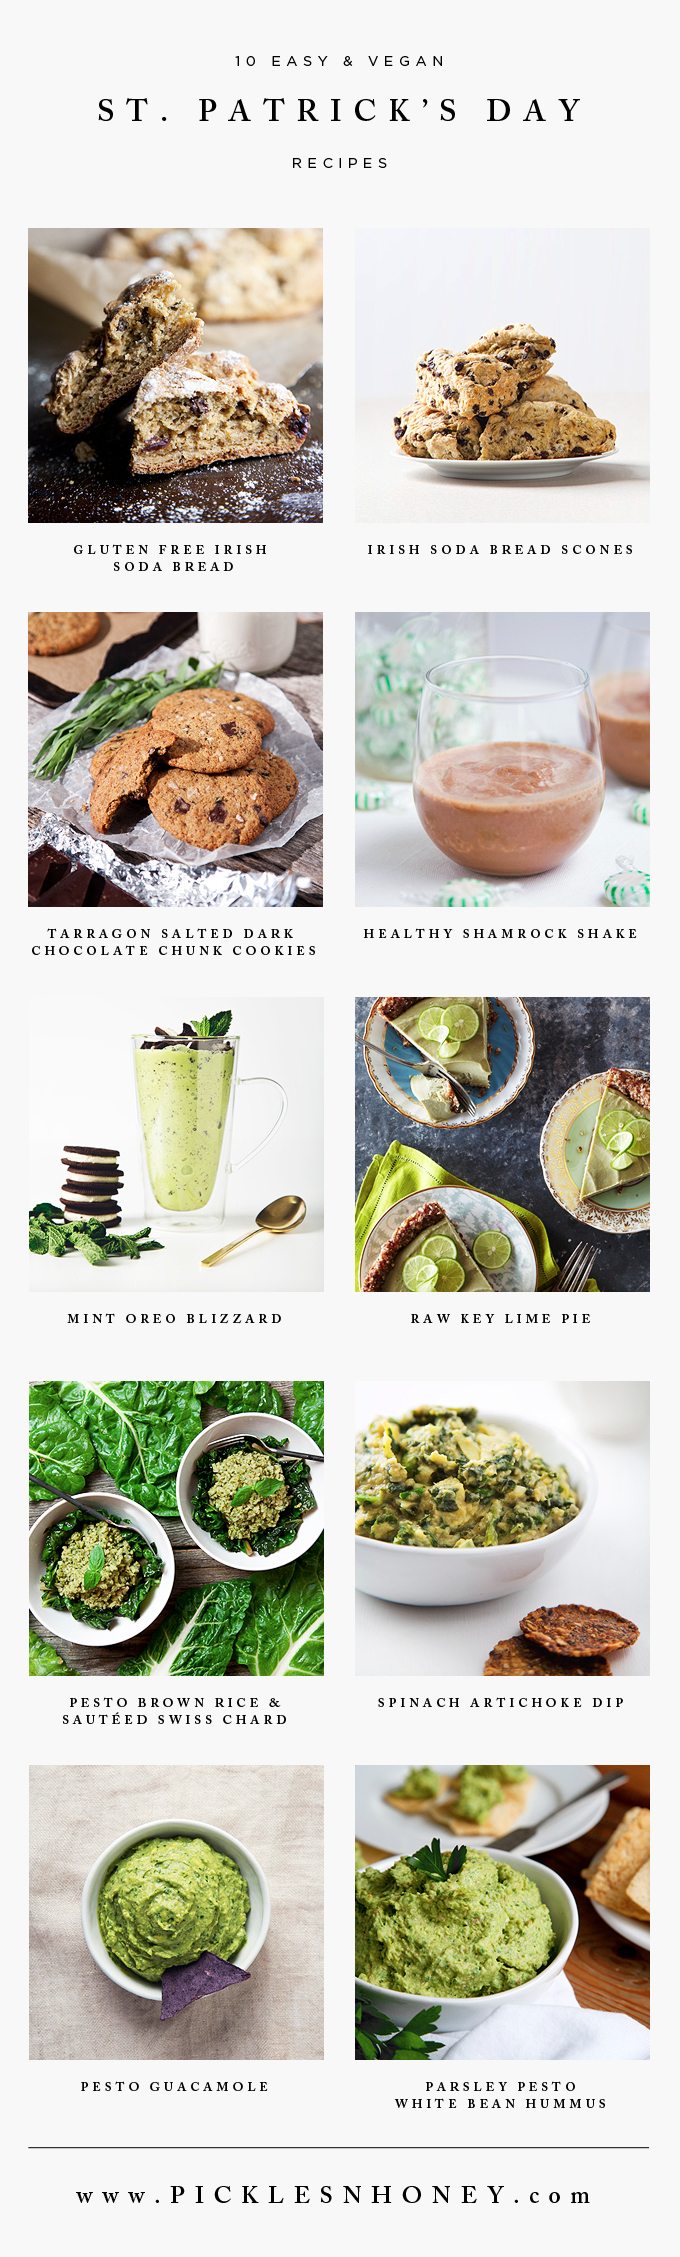 10 Easy & Vegan St. Patrick's Day Recipes | picklesnhoney.com #vegan #recipes #stpatricksday